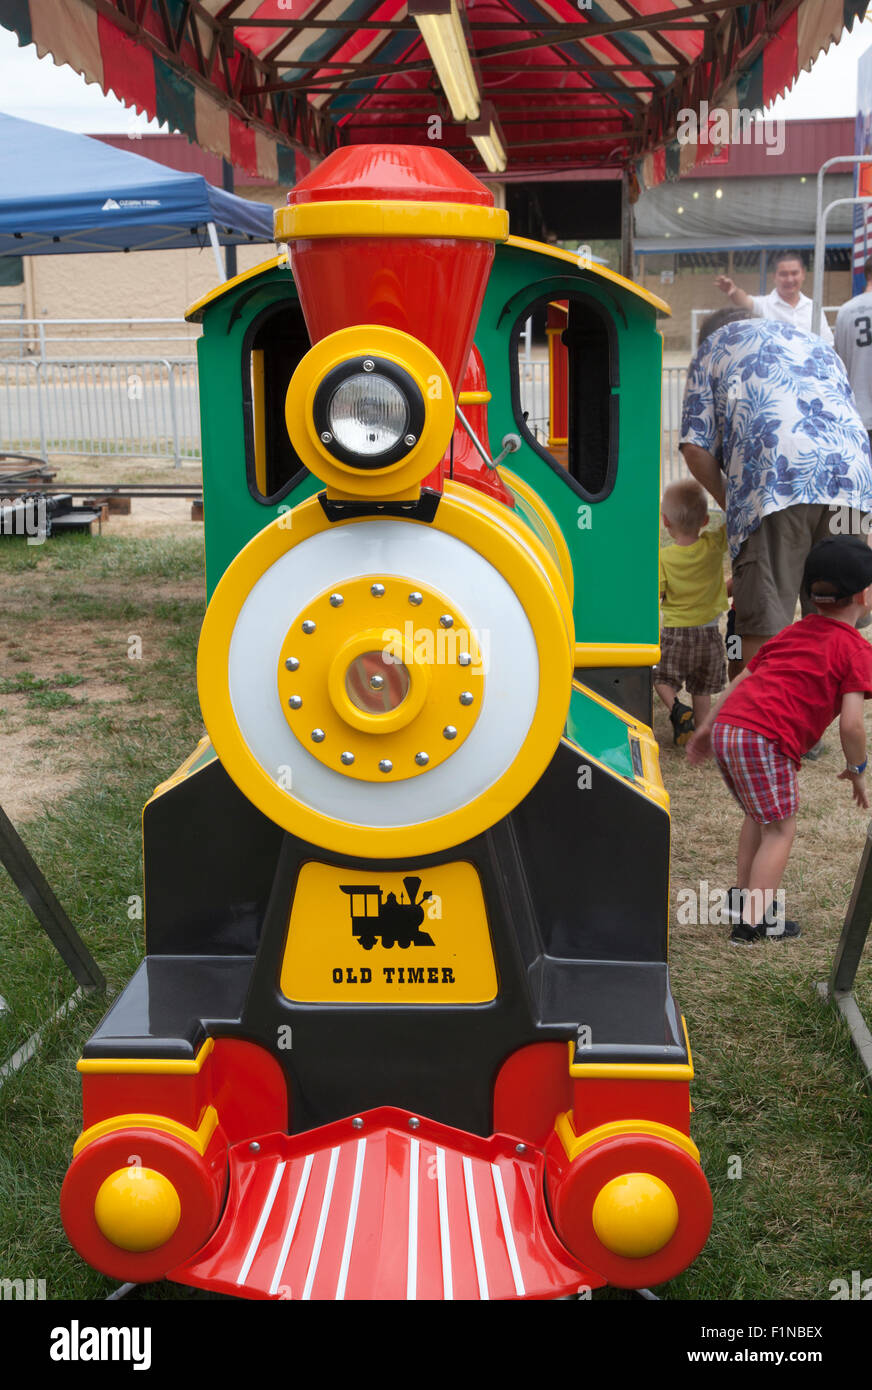 Children's train ride at the Fair, US, 2015. Stock Photo